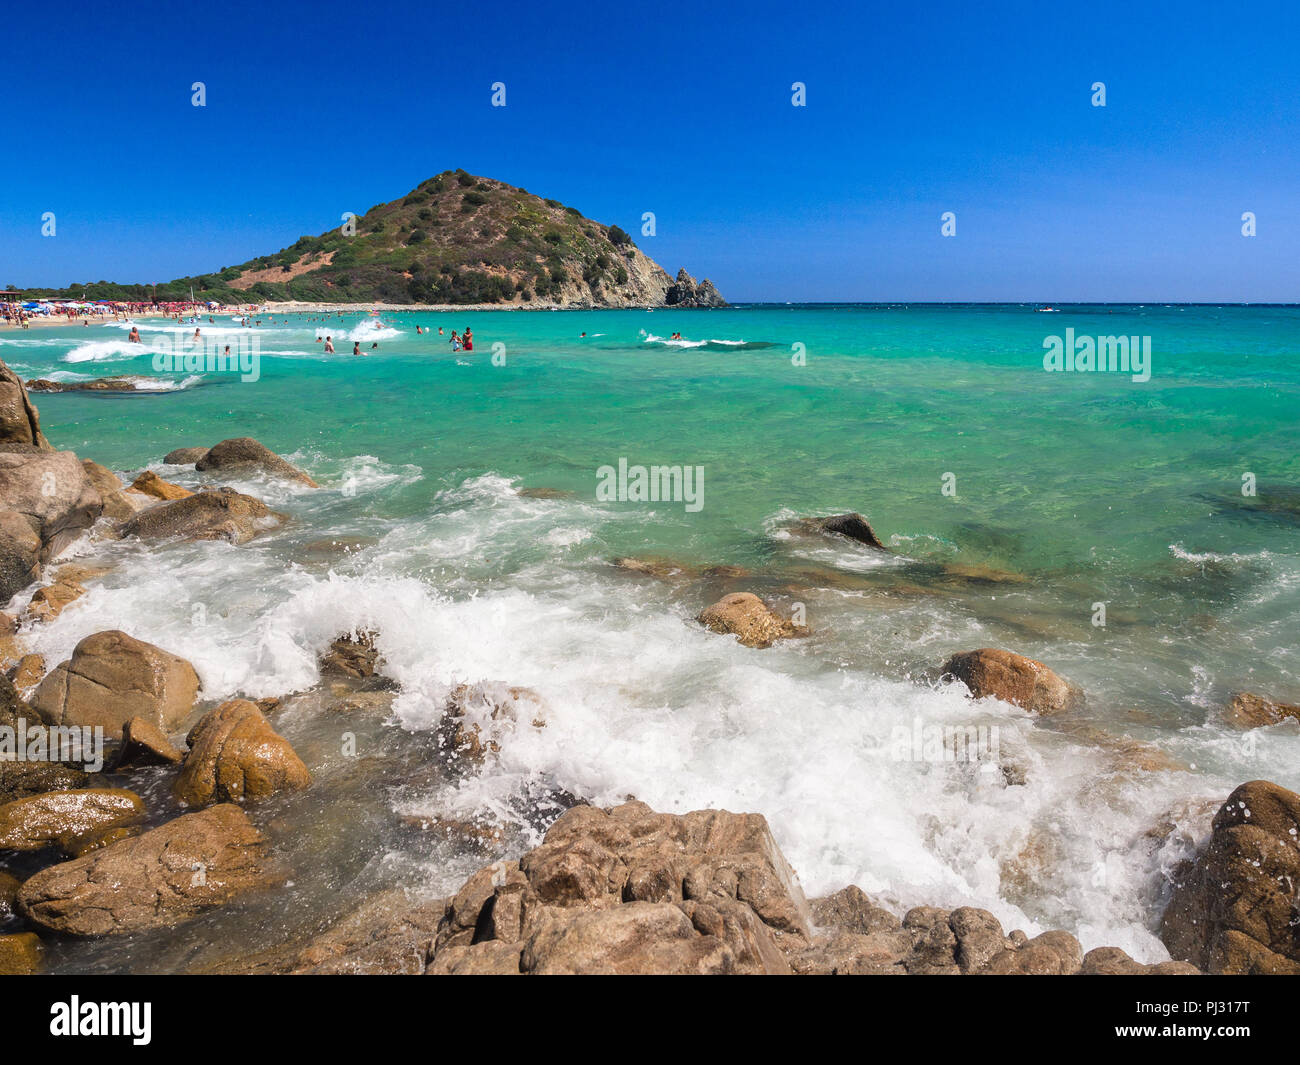 Villasimius, Italien - 18. August 2017: Transparente und das türkisfarbene Meer in Cala Sinzias, Villasimius. Sardinien Italien Stockfoto